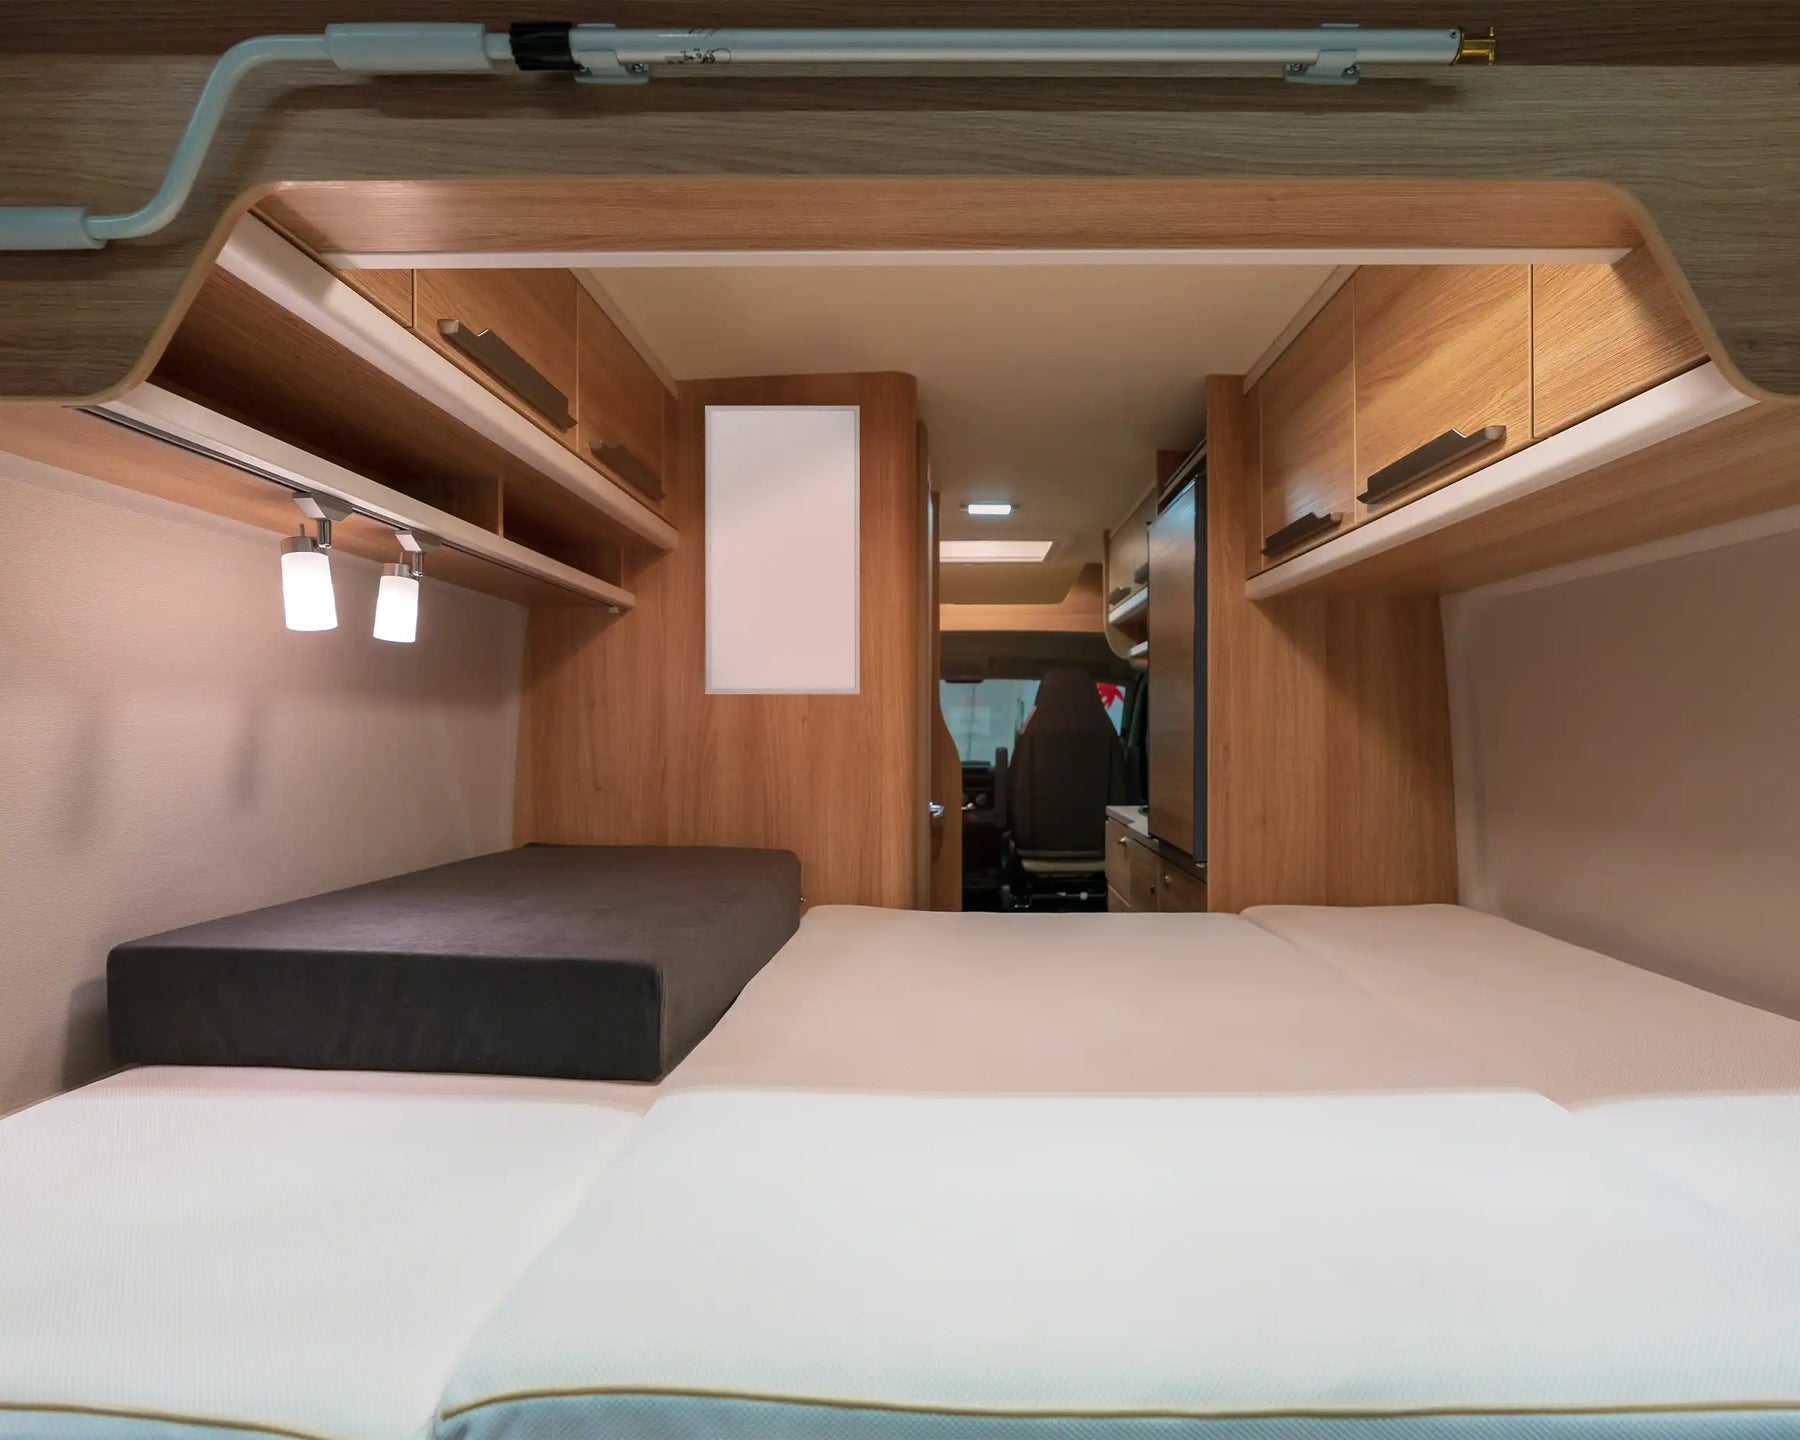 Kiasa 180w Camper Van Infrared Heater bedroom Low Wattage Heater Portable